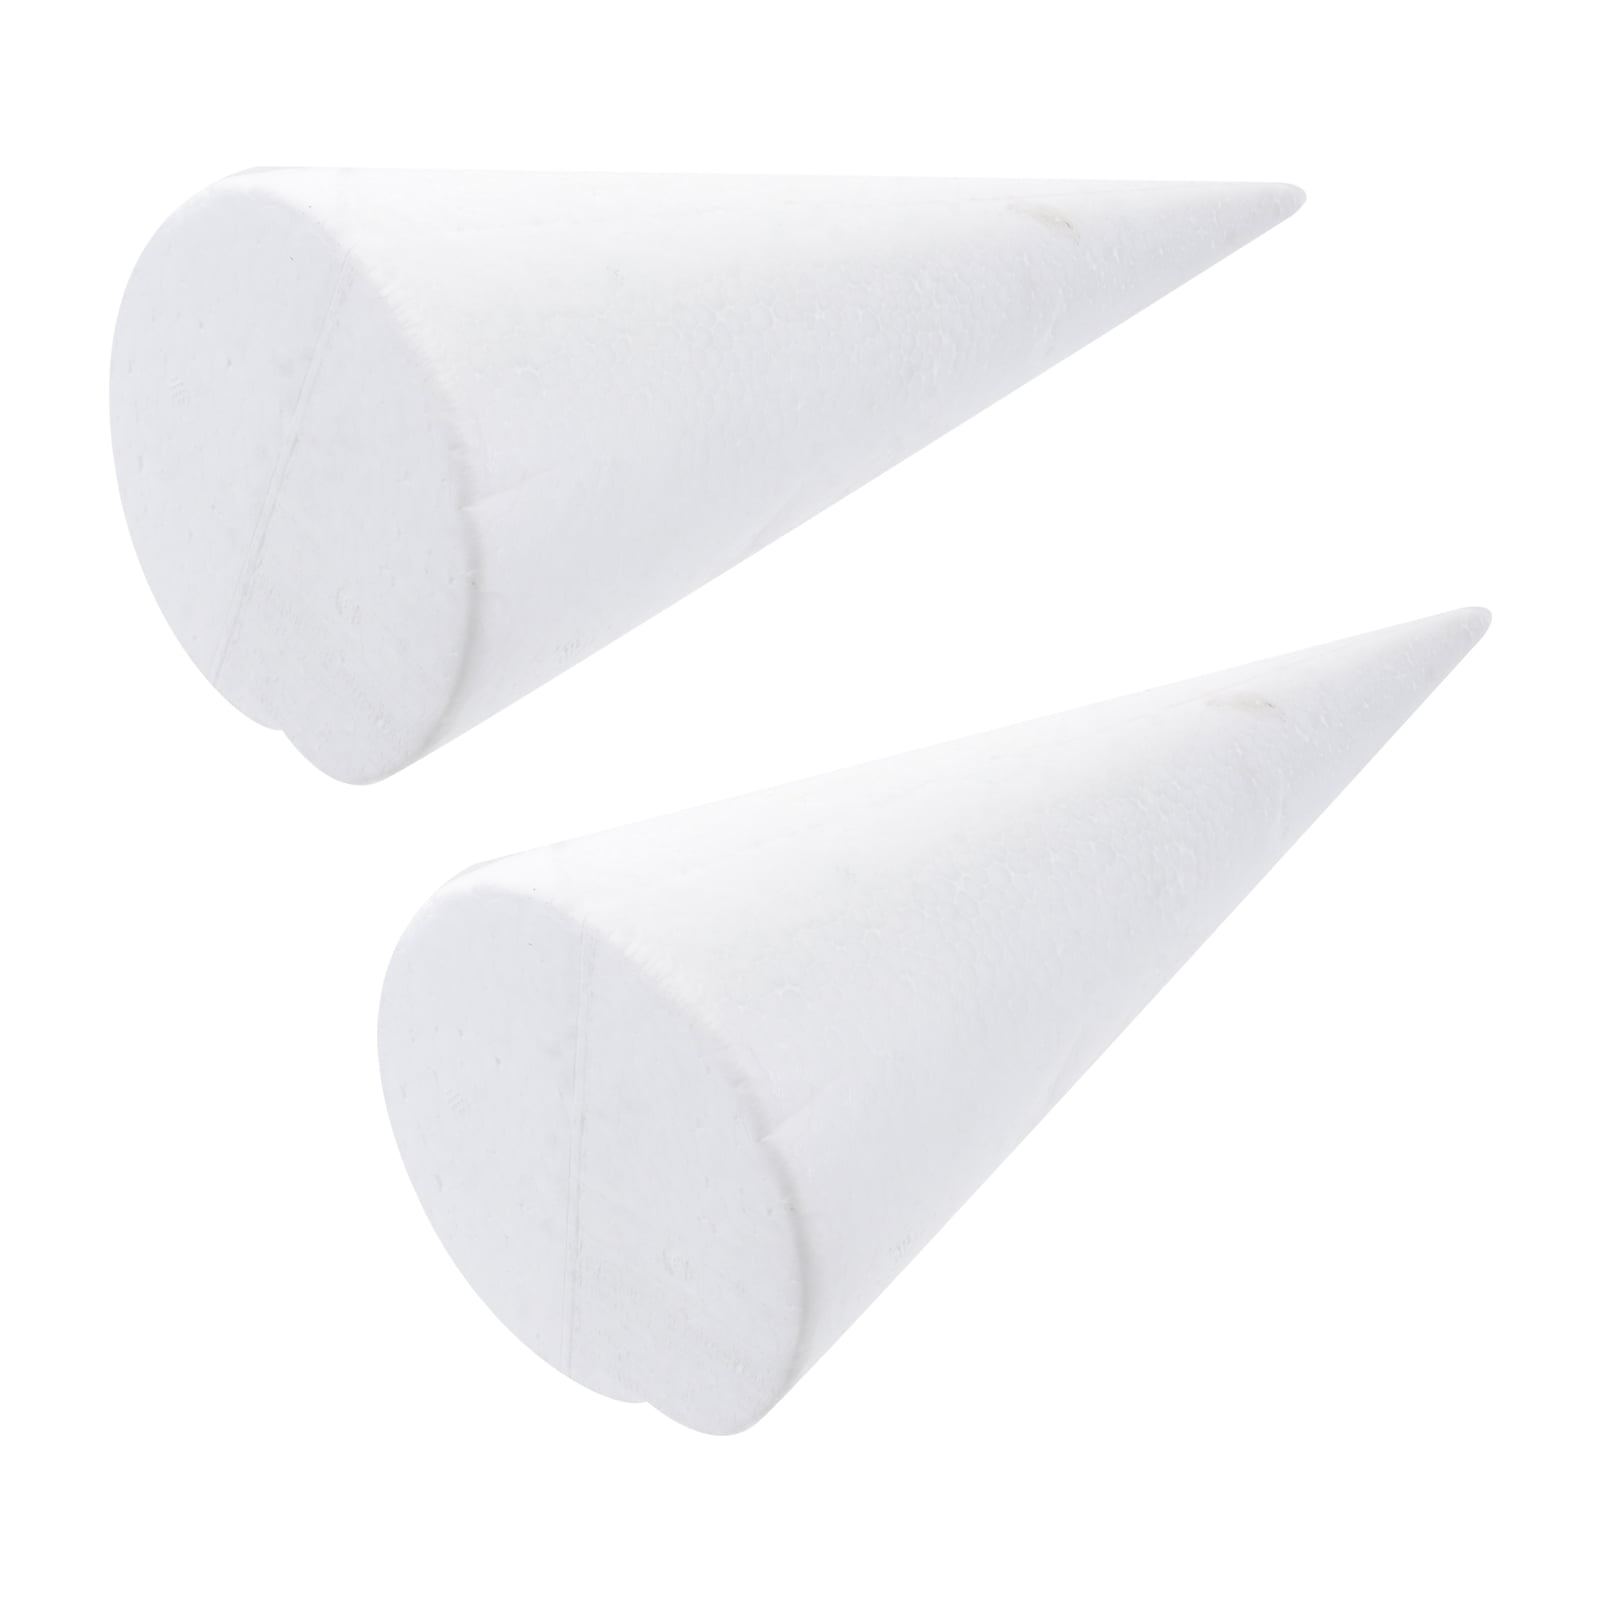 96 Wholesale 2 Piece Craft Foam Cone White Styrofoam 5.6x3.5 Inches - at 